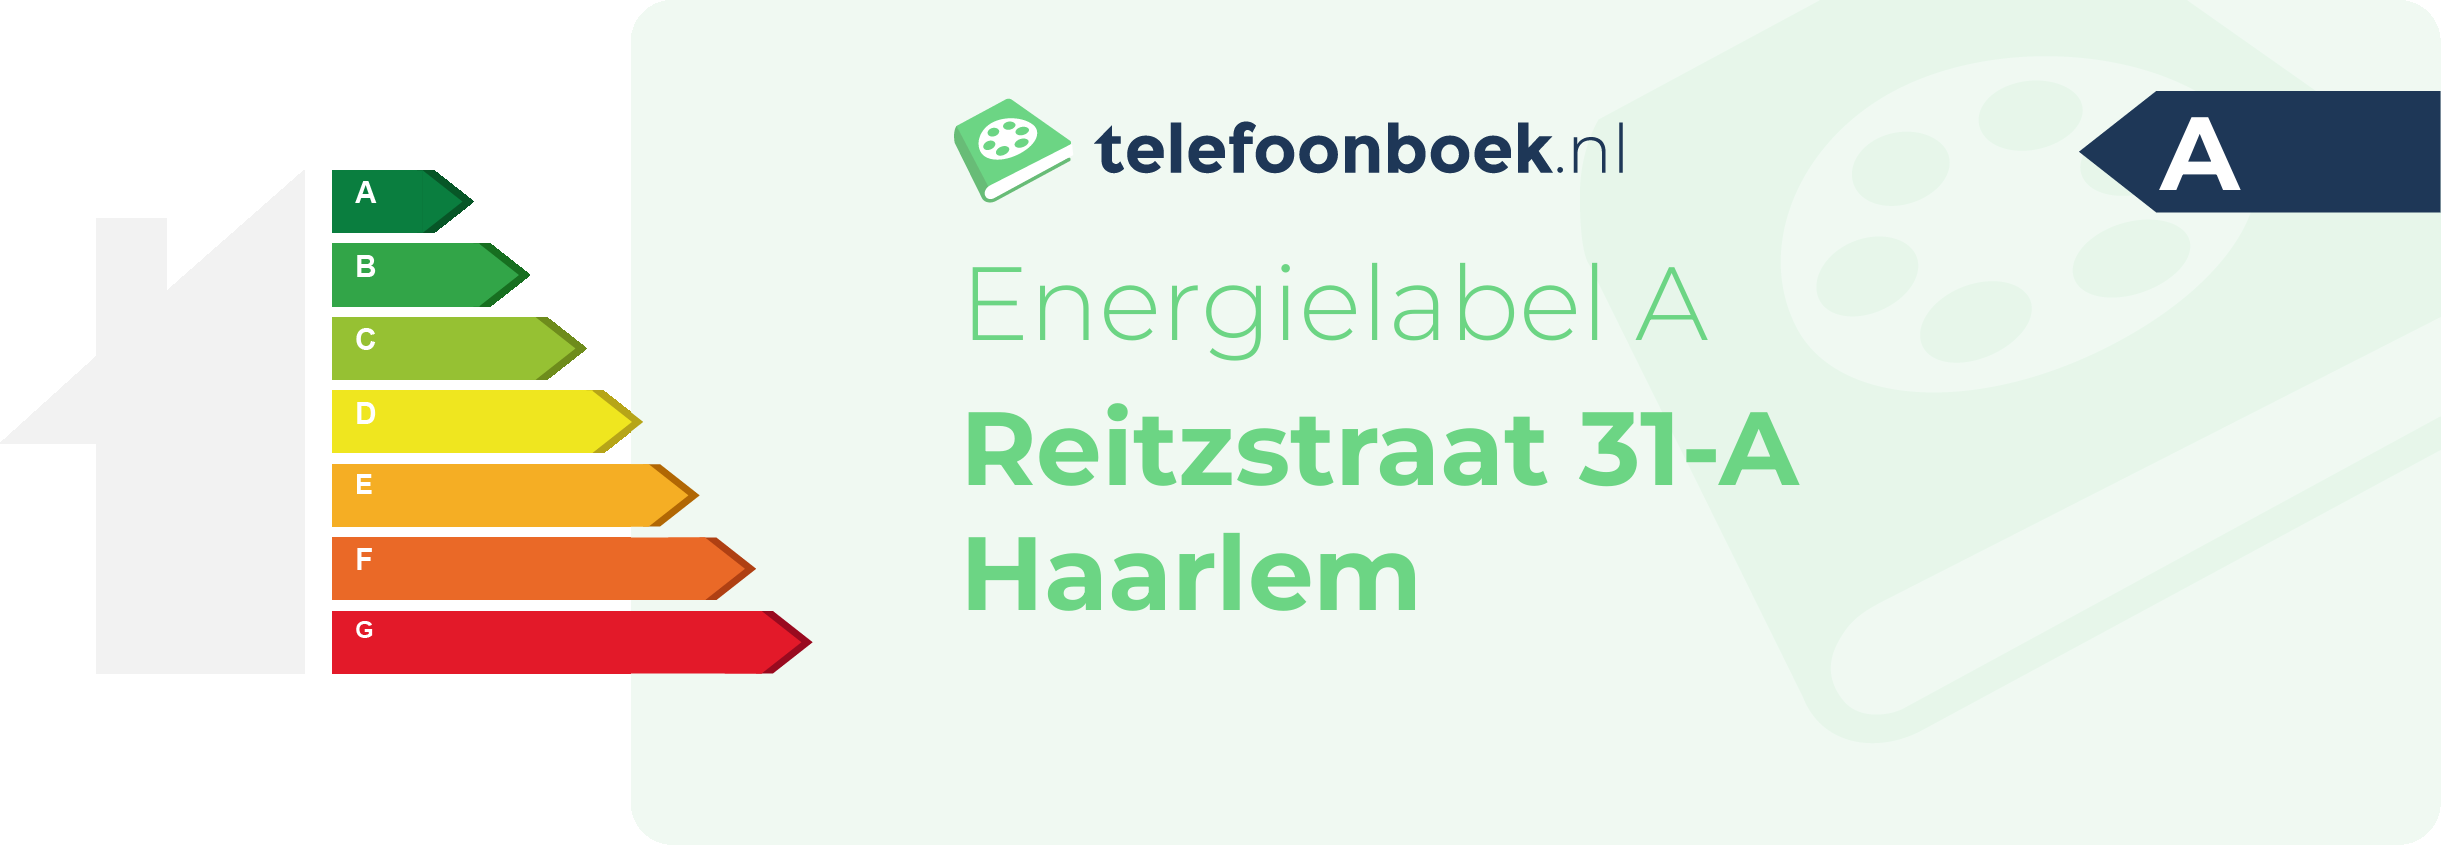 Energielabel Reitzstraat 31-A Haarlem